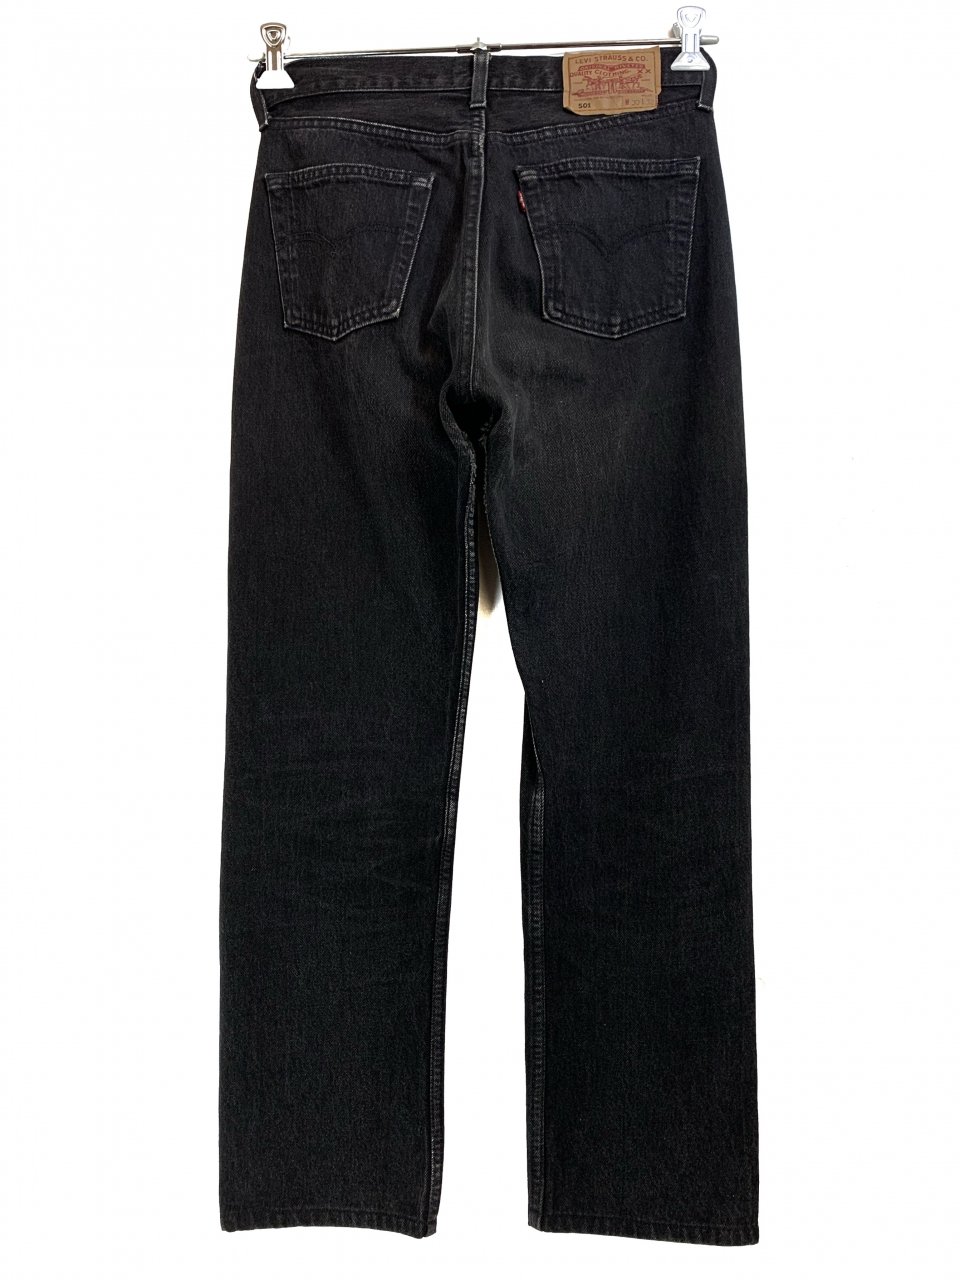 UK製 90s Euro Levi's 501 Black Denim Pants 黒 W30×L29 ユーロ